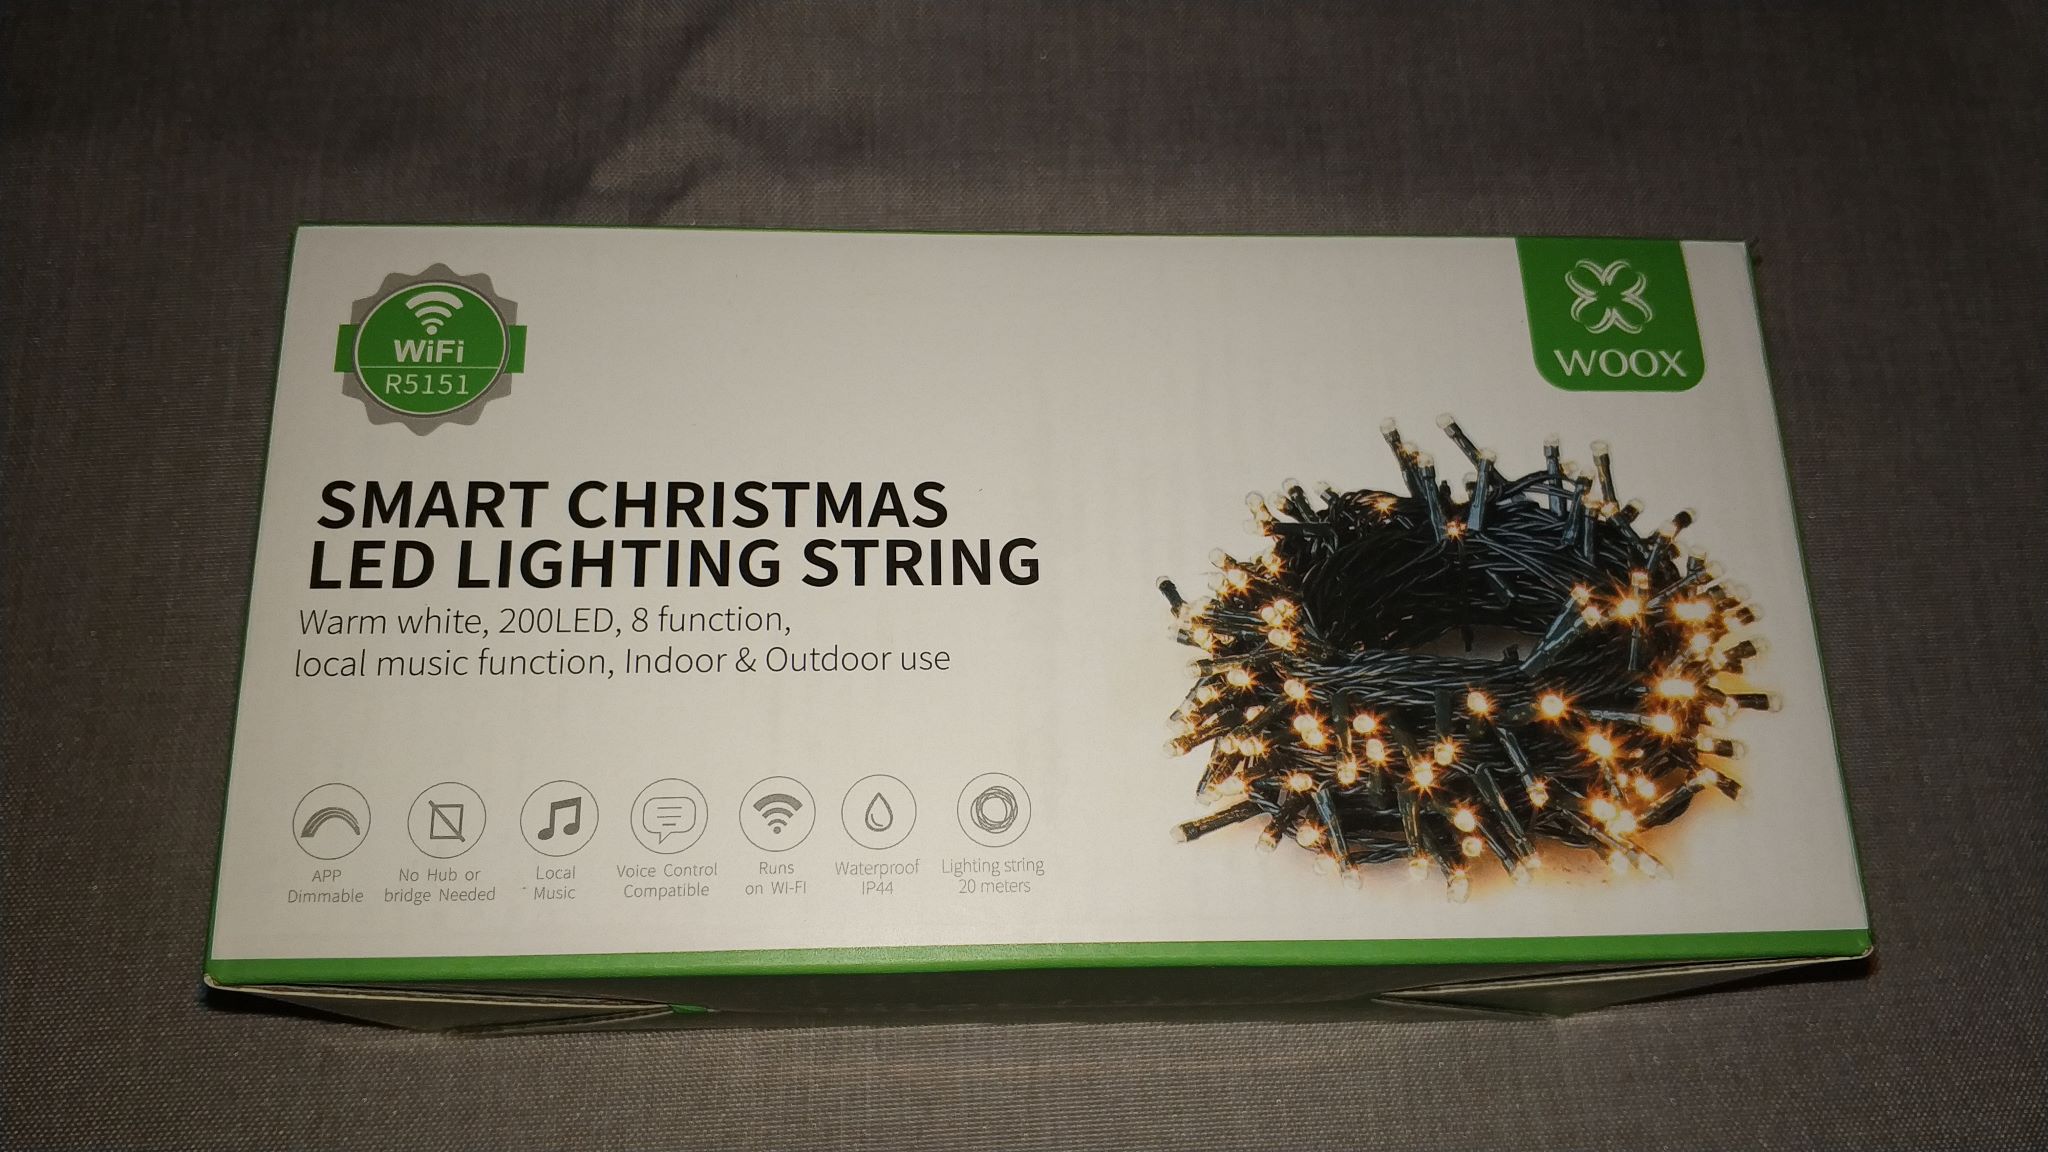 Woox - Guirlande lumineuse LED de Noël intelligente 20mtr - R5151 - Lampe  connectée - LDLC